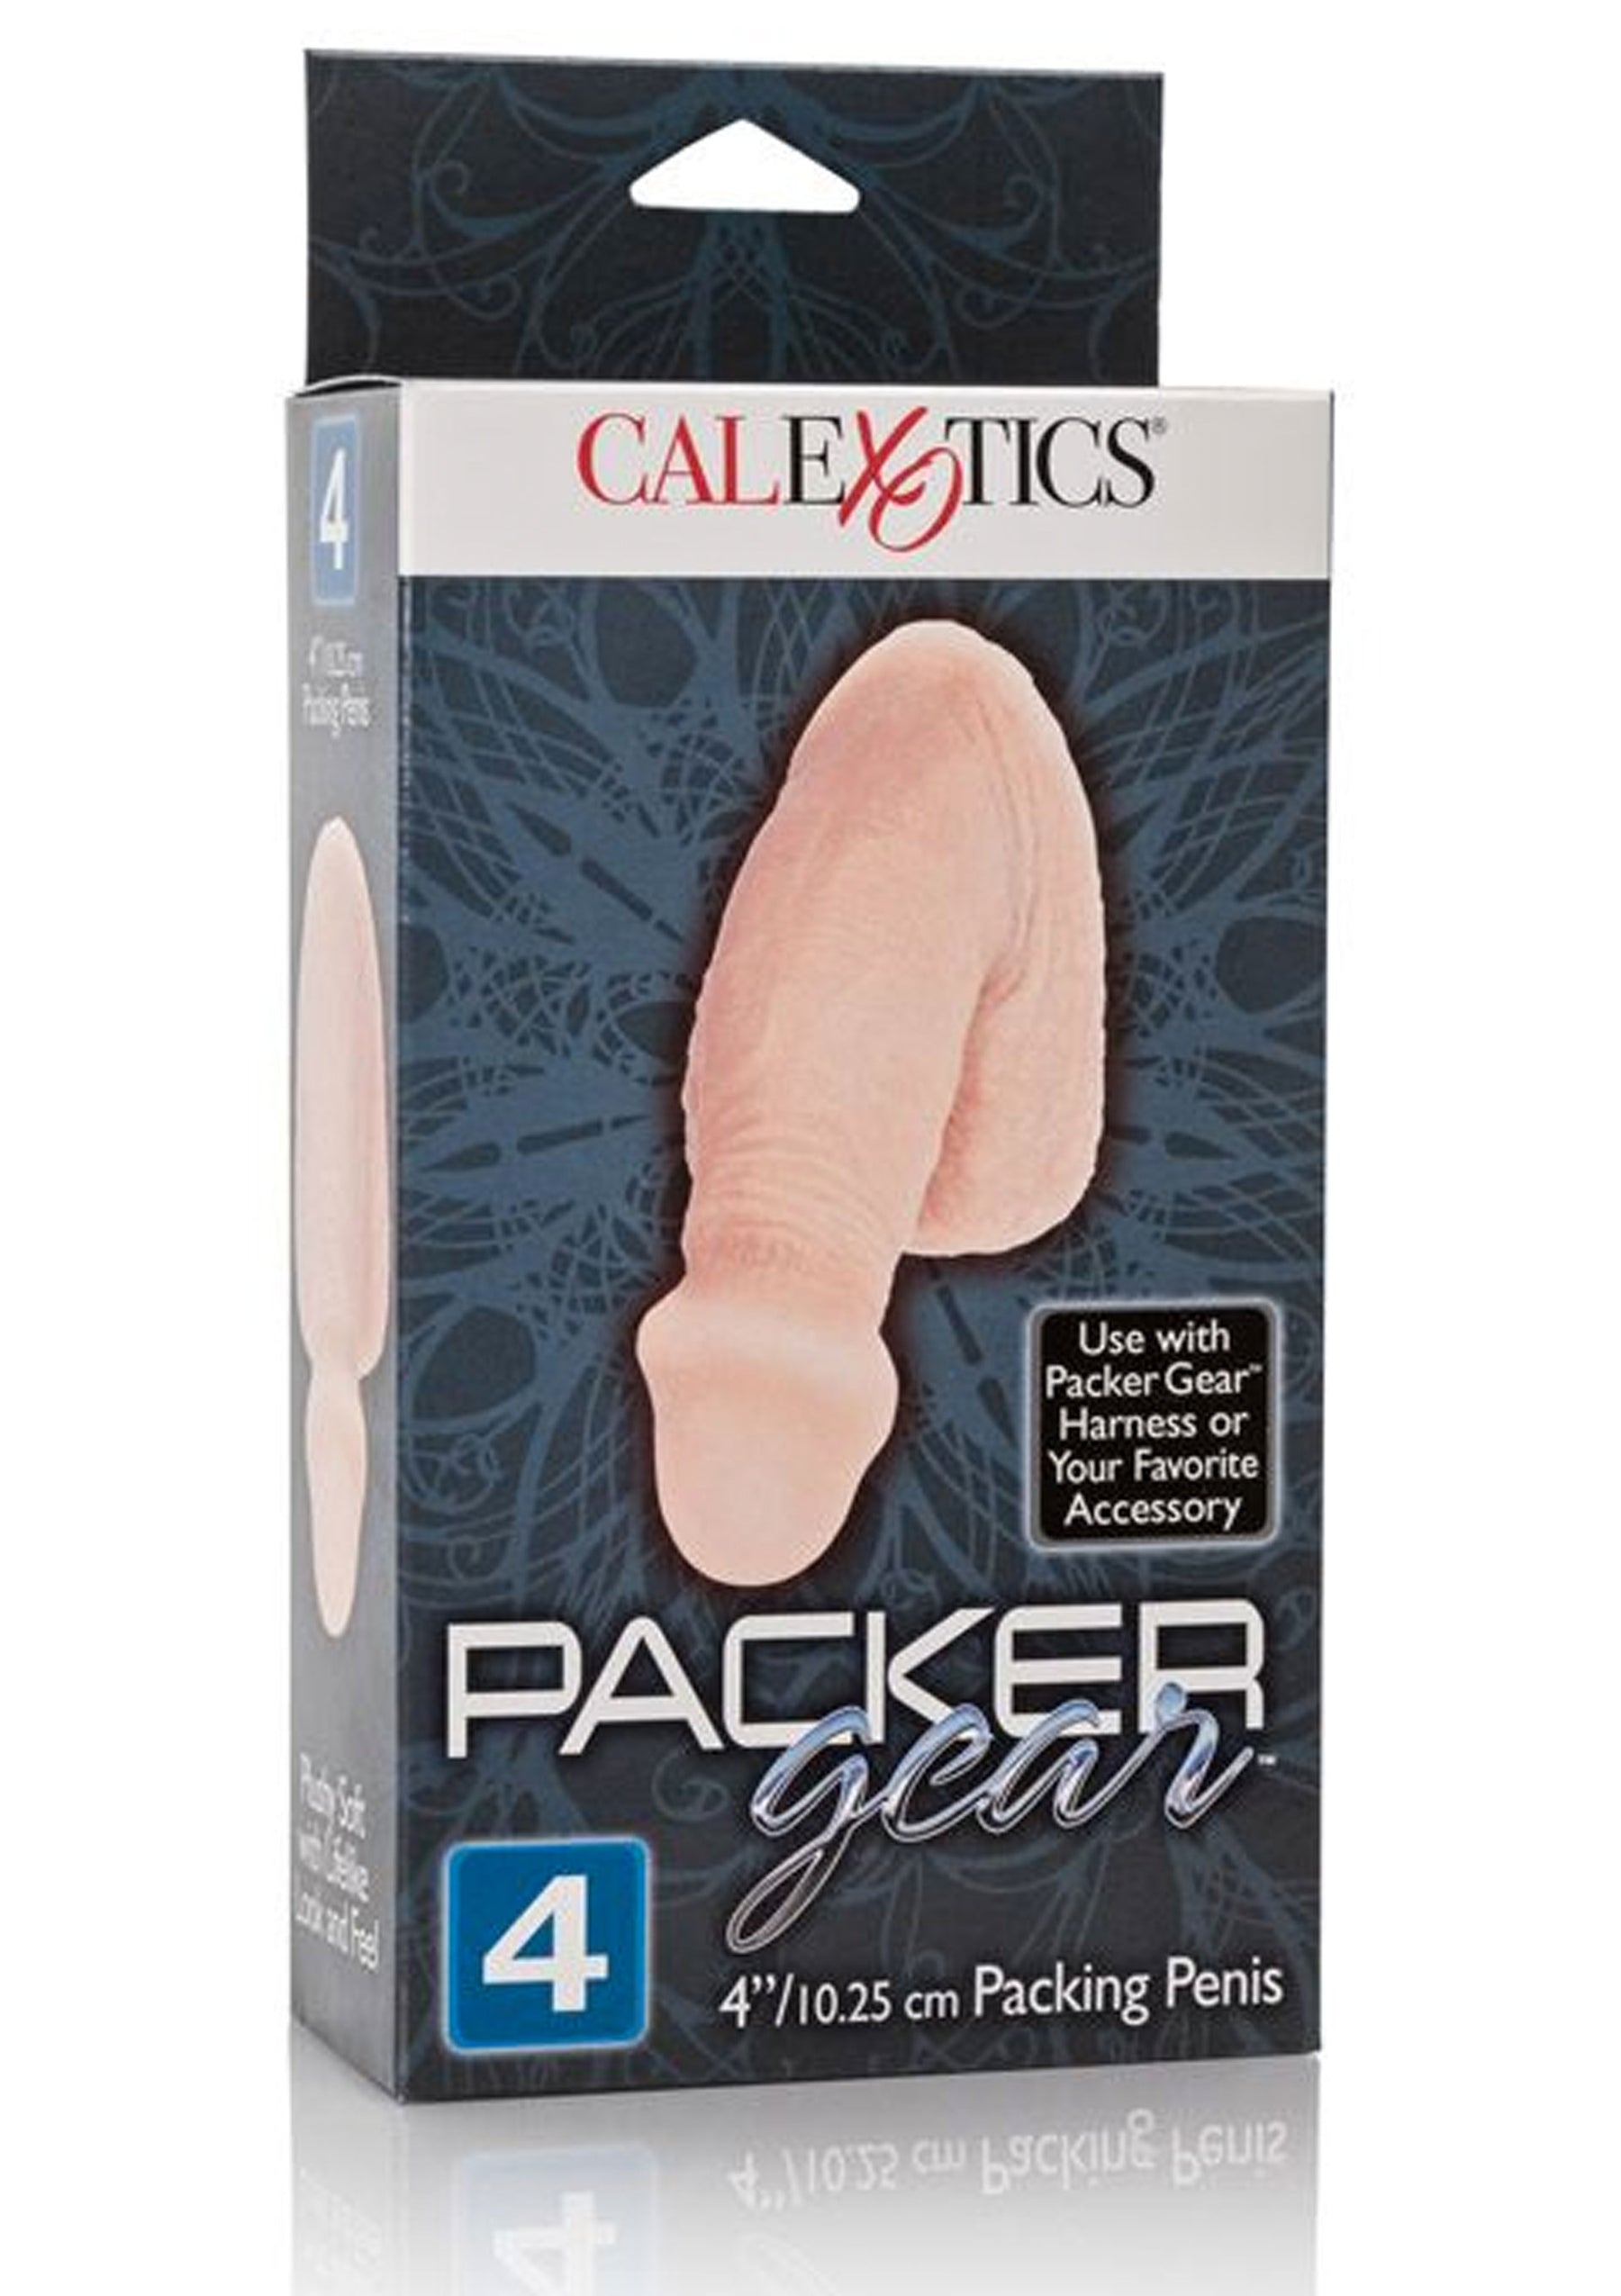 Packing Penis 4 in. / 10.3 cm